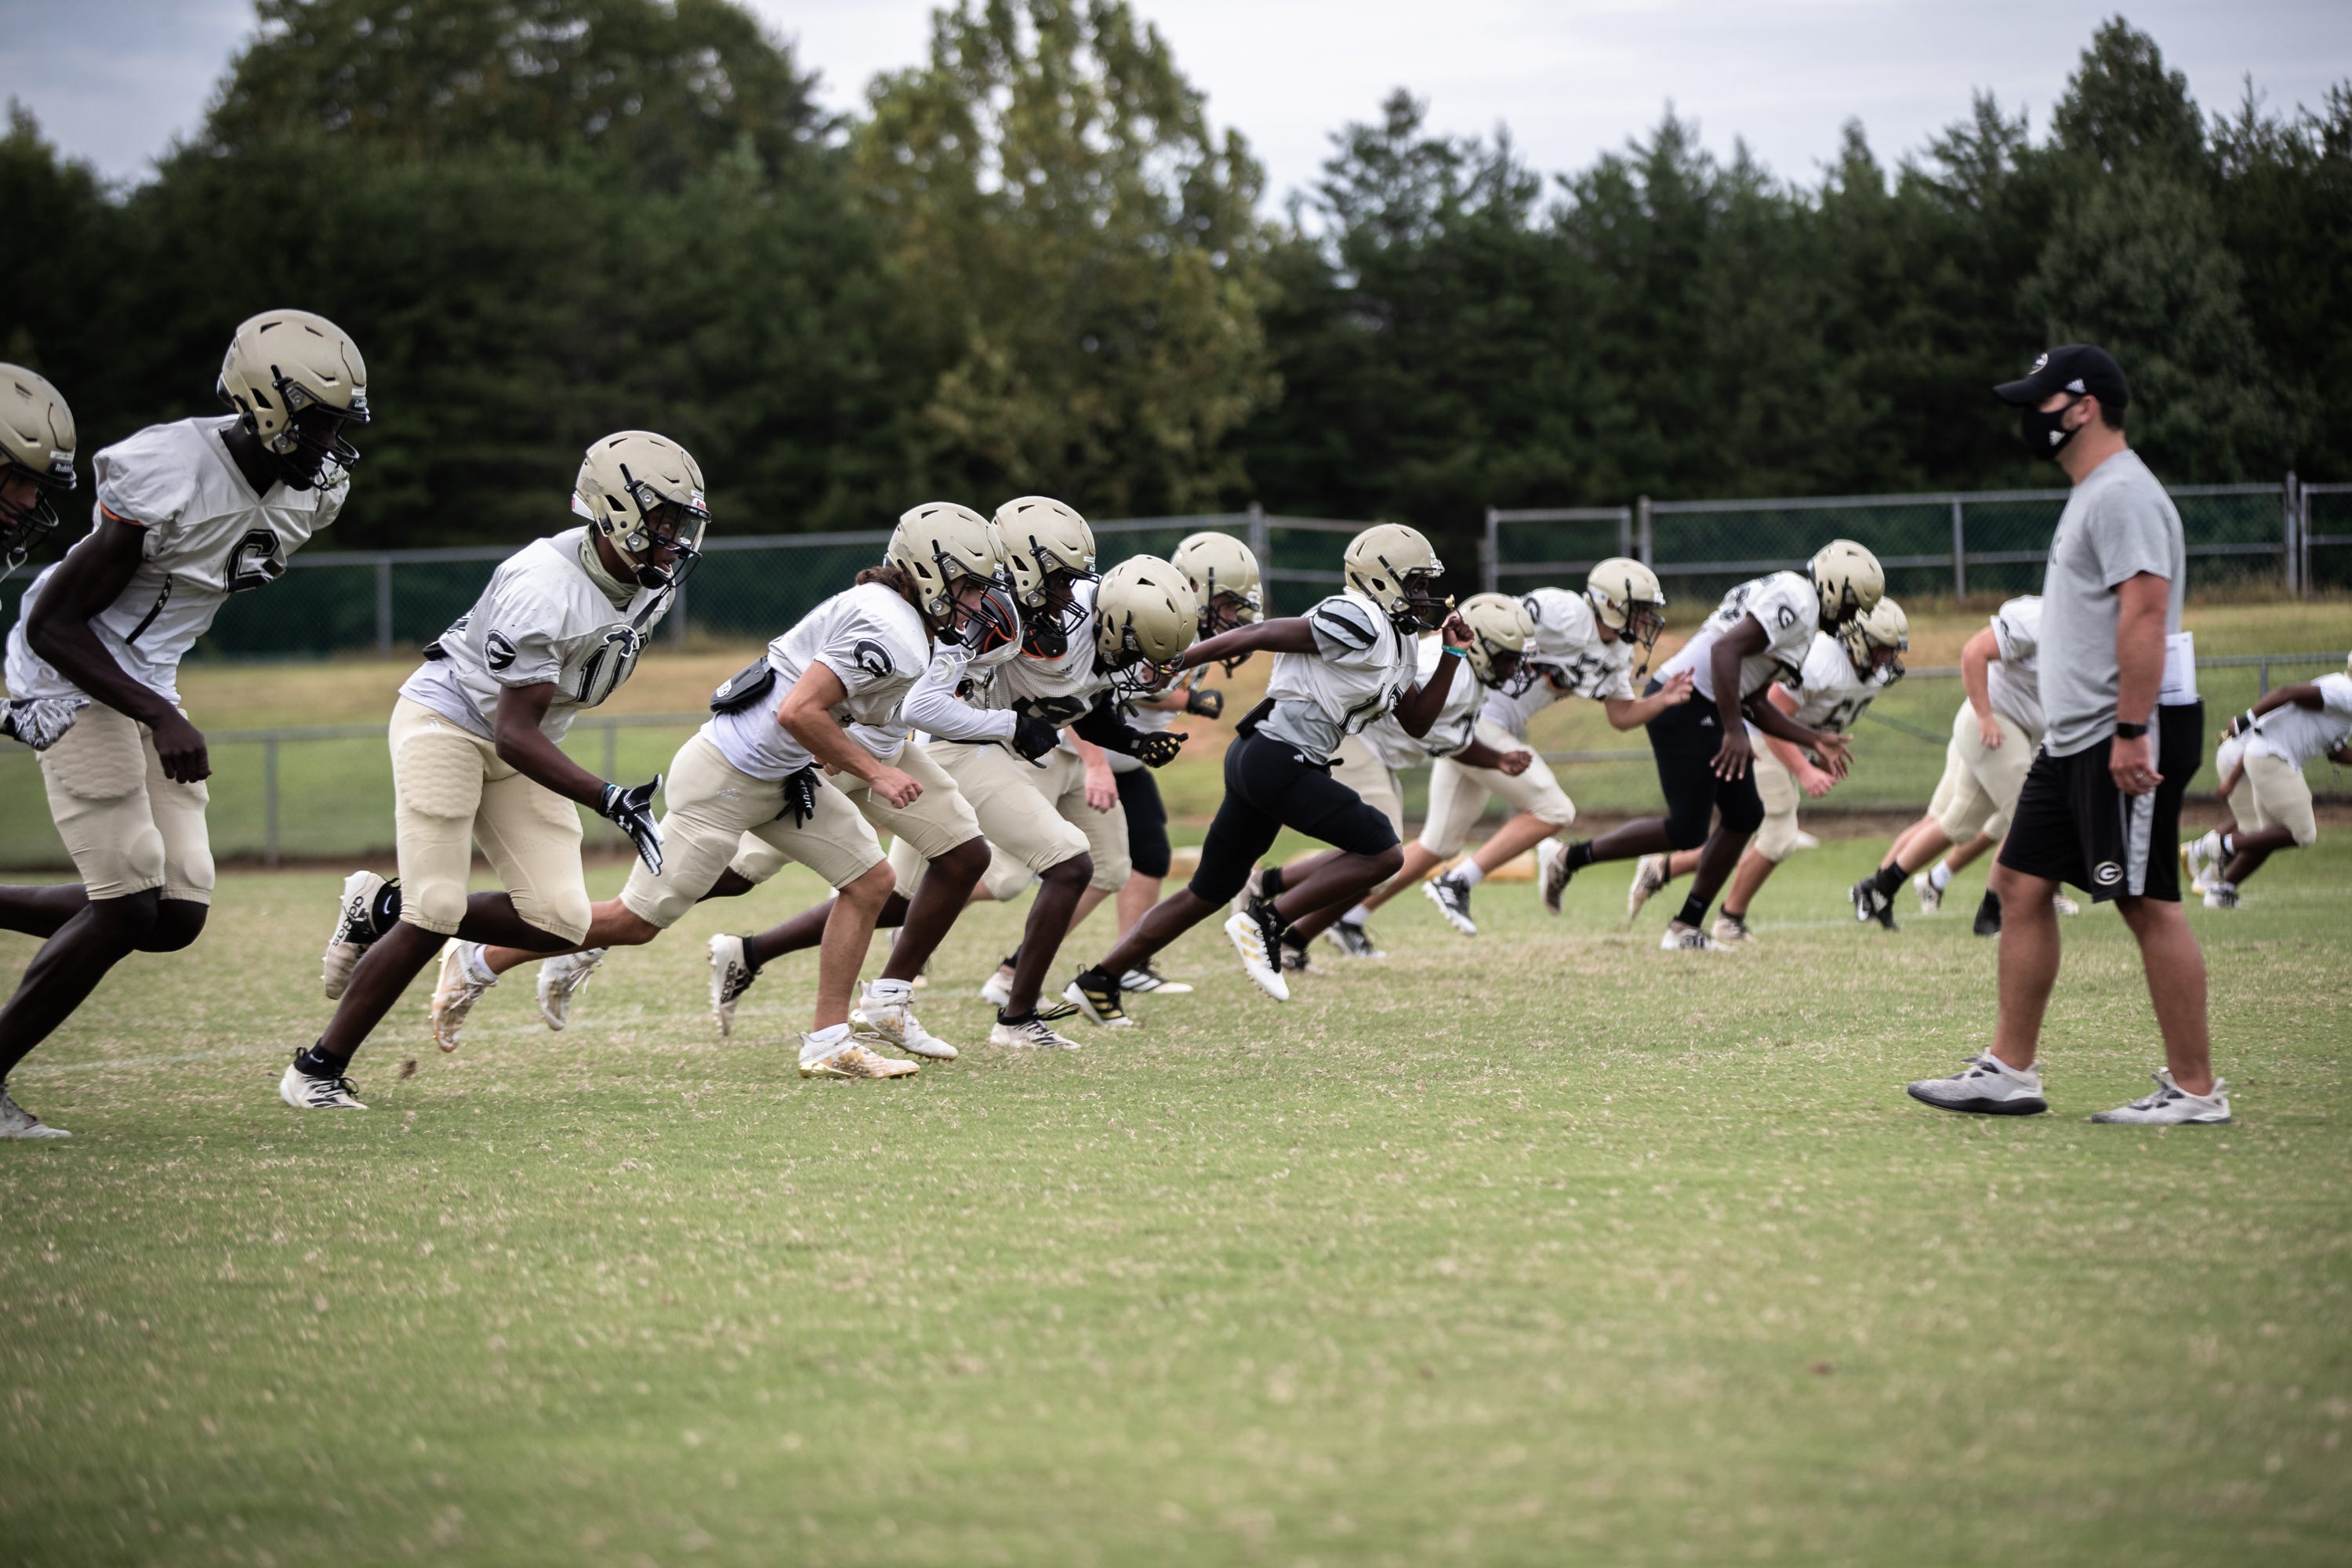 The Greer High School football team practices, Wednesday, September 16, 2020.